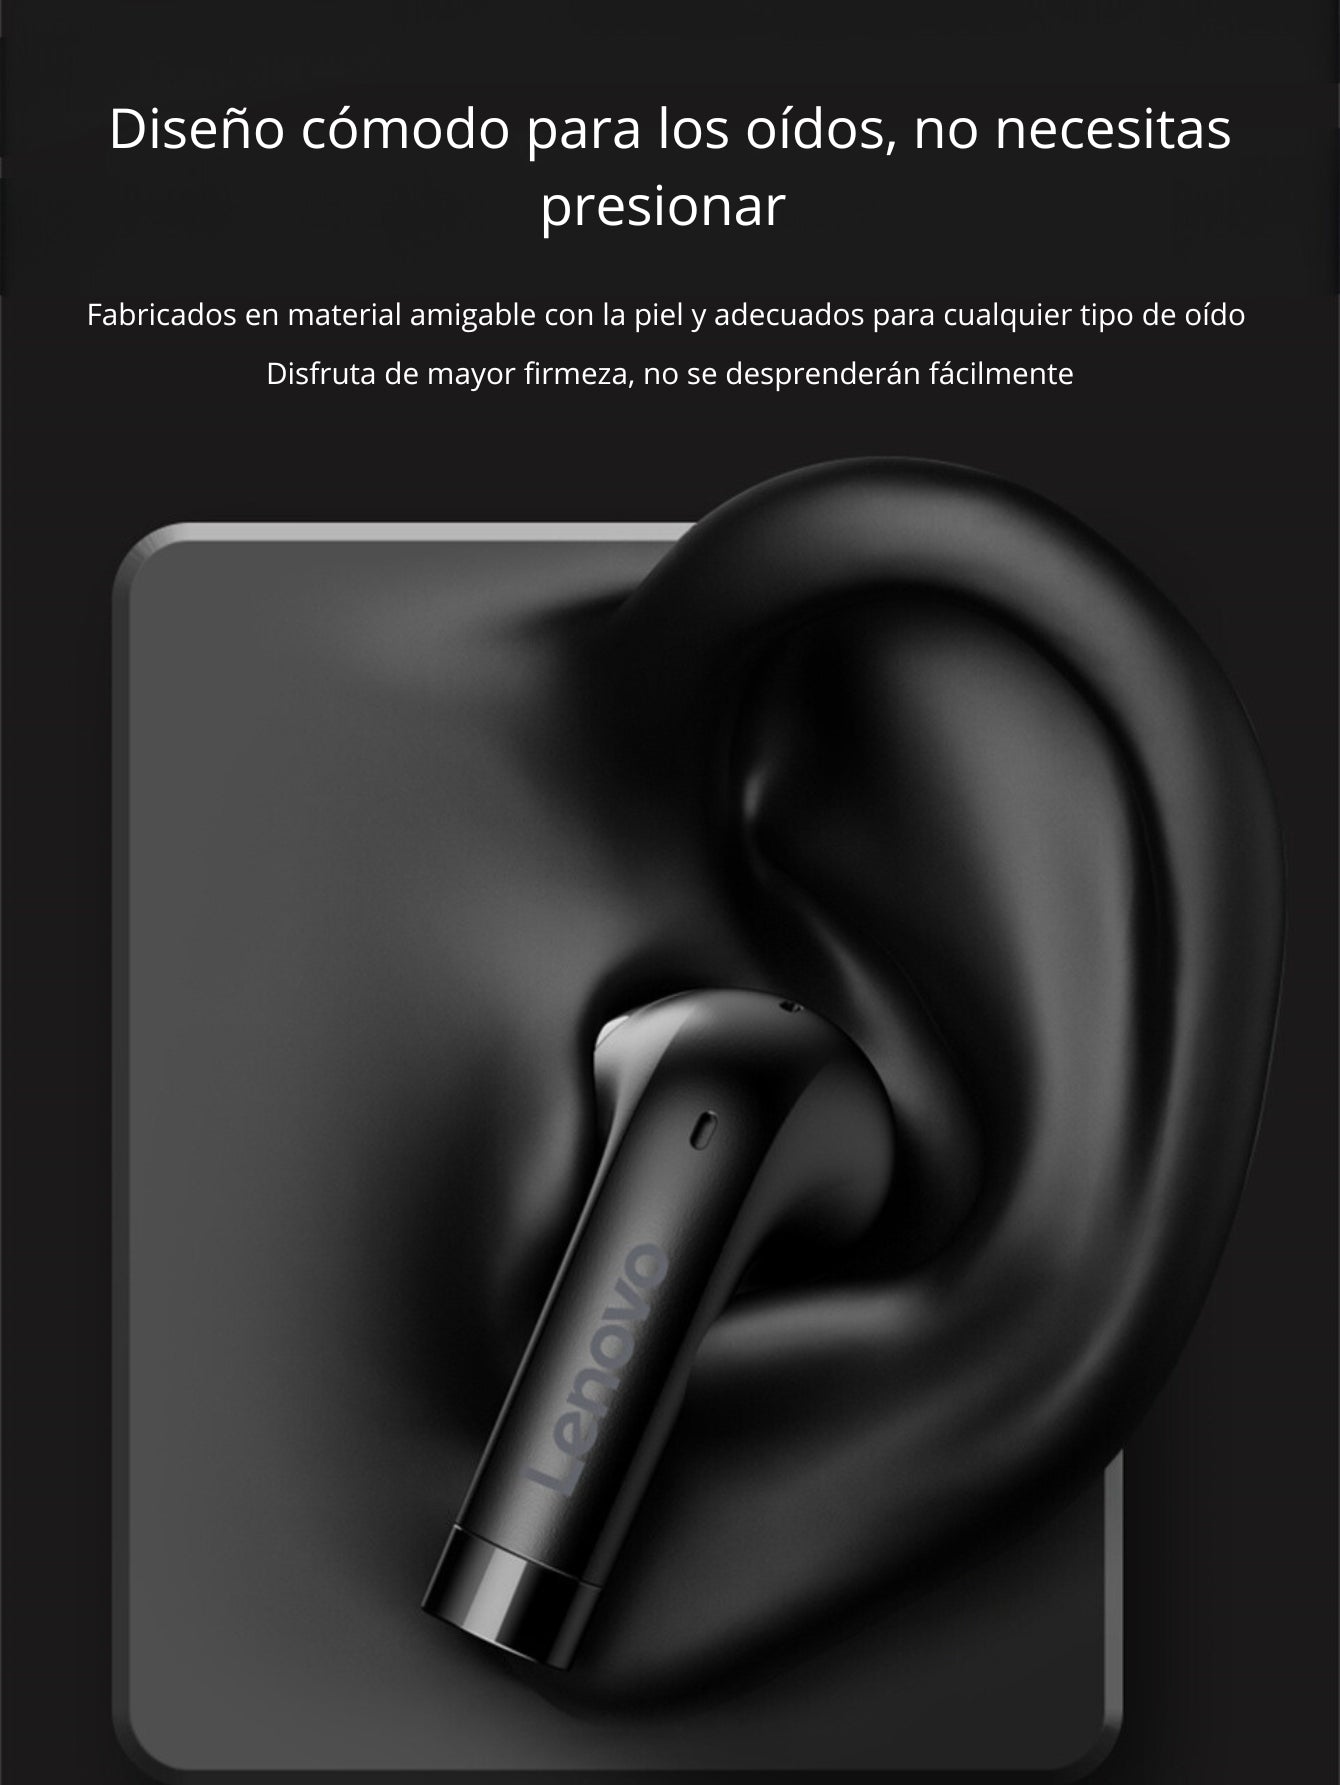 Lenovo LP60 TWS Auriculares inalámbricos Bluetooth 5.3 con reducción de  ruido (negro)